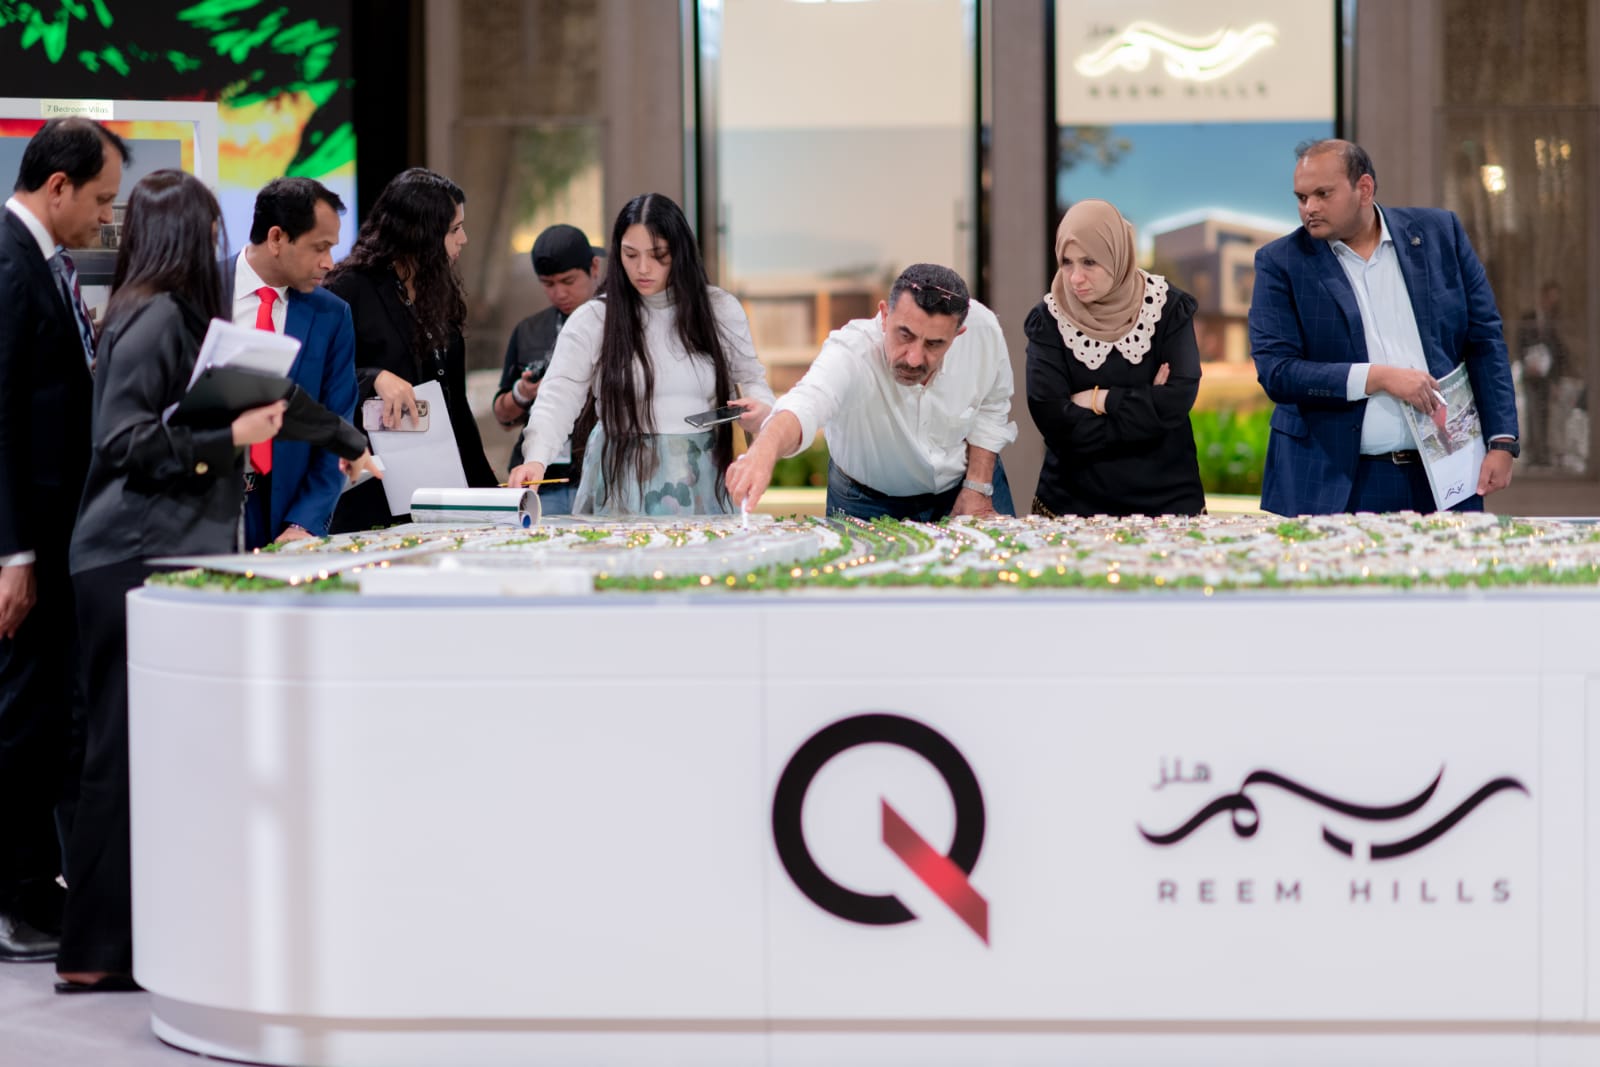 A testament to Reem Hills' success as Abu Dhabi's premier luxury gated community